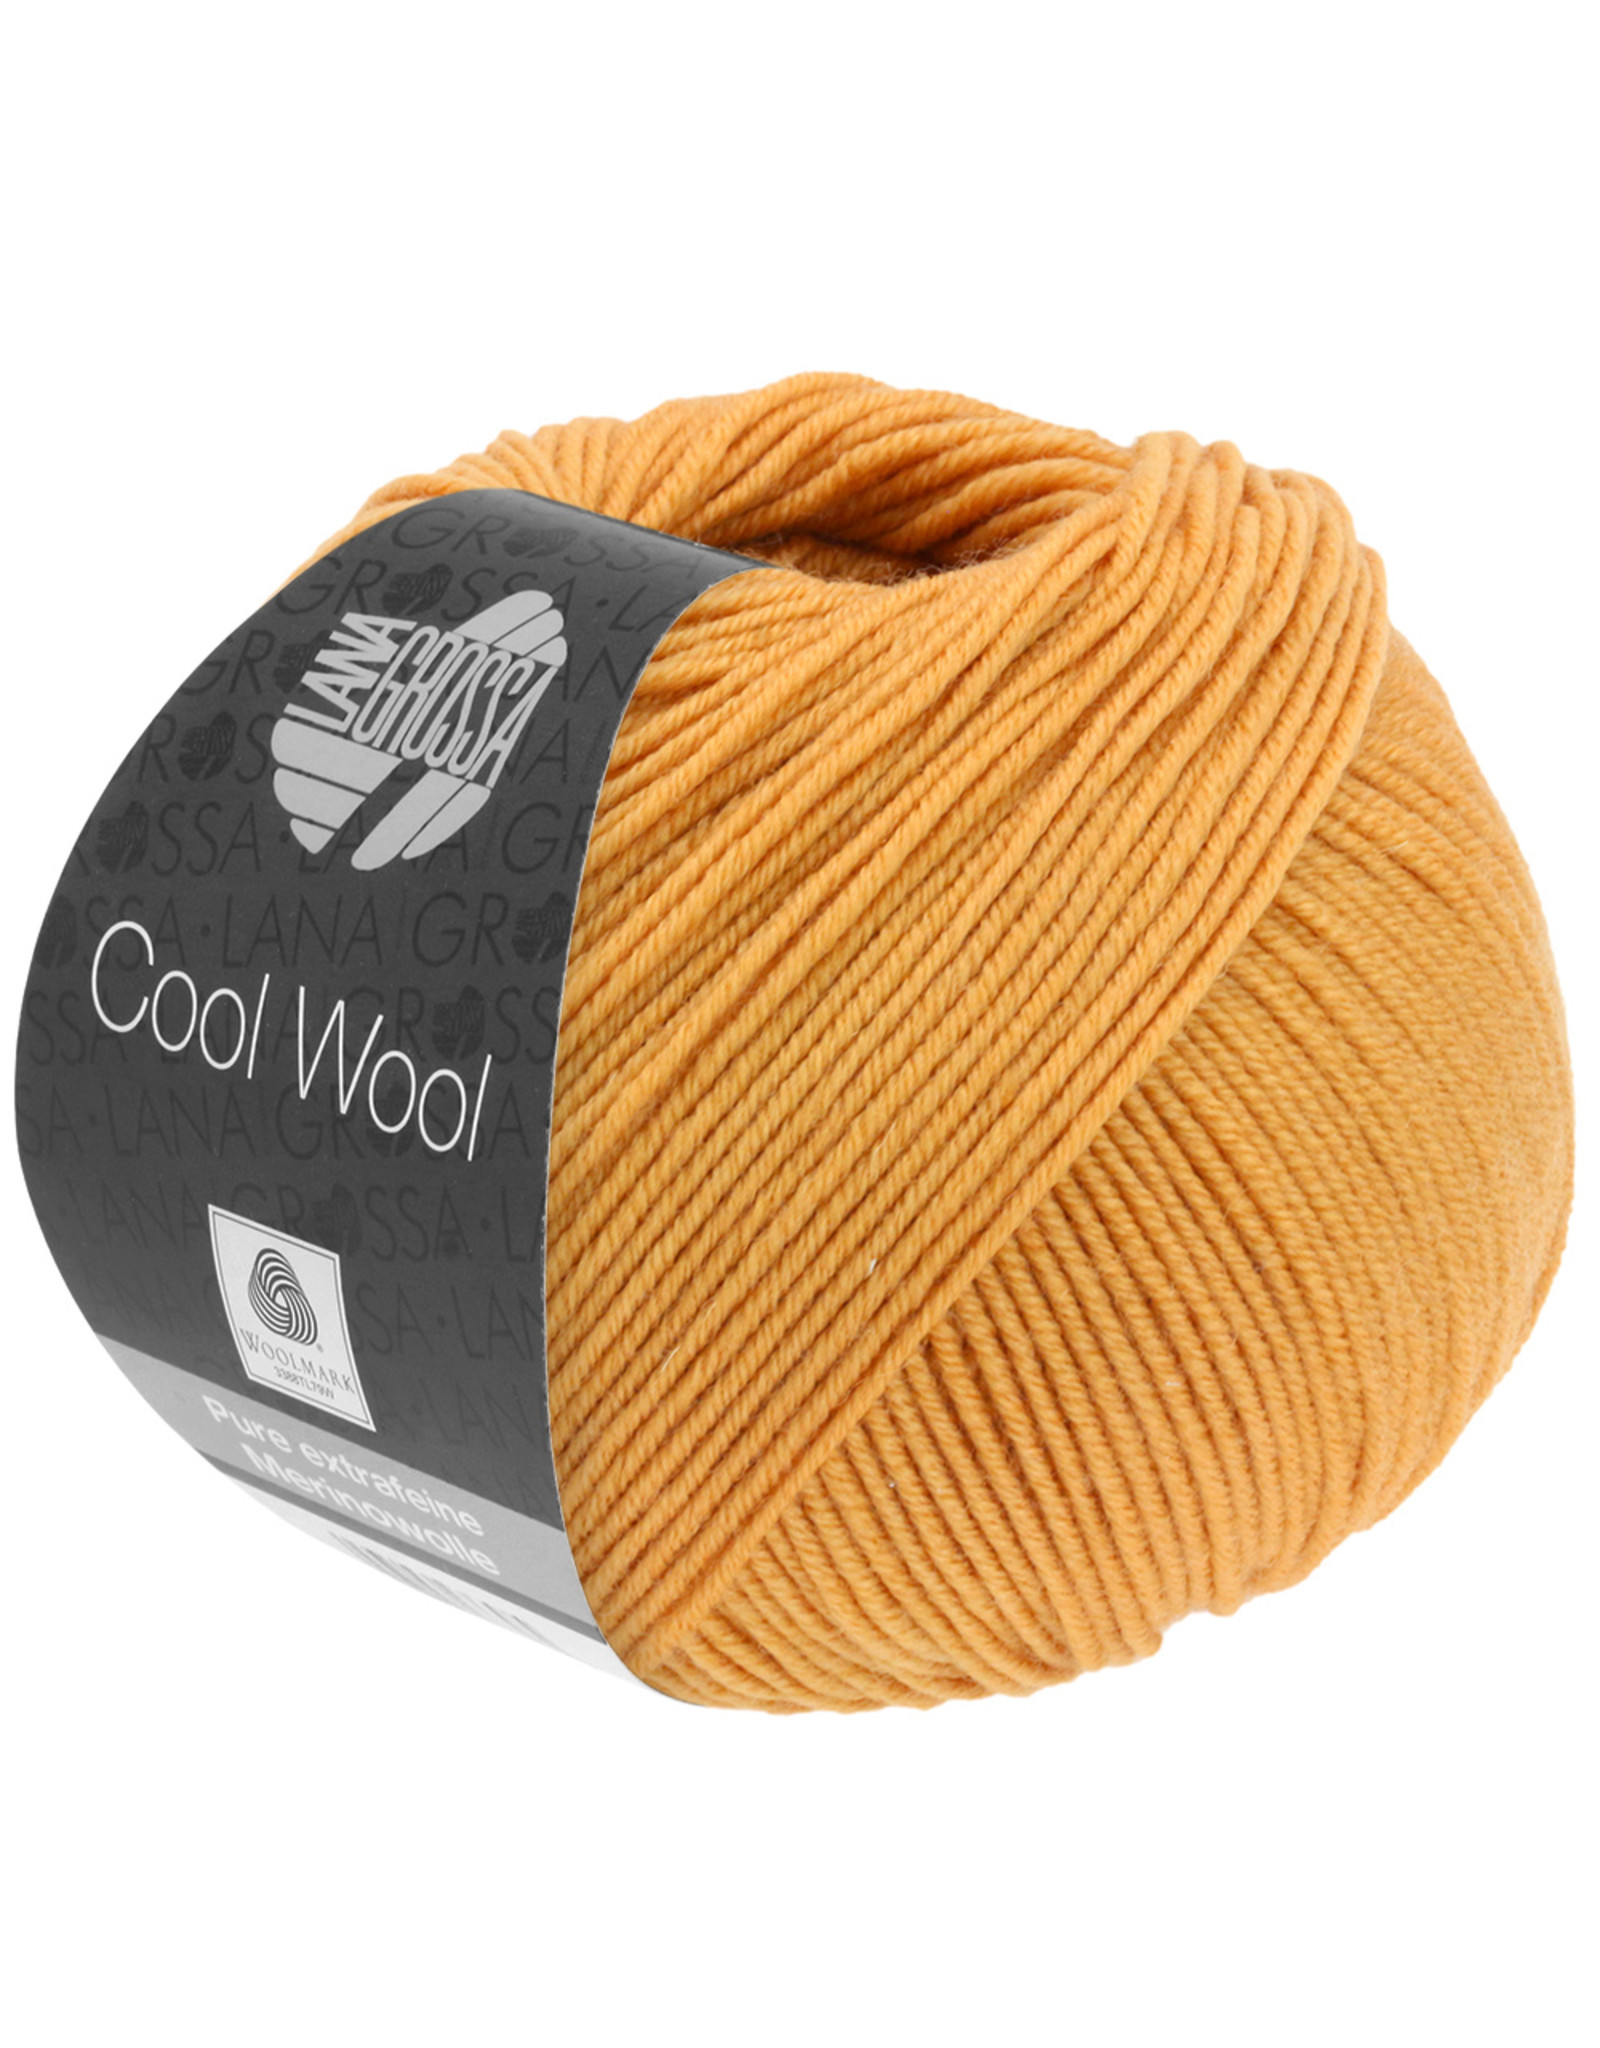 Lana Grossa Lana Grossa Cool wool 2083